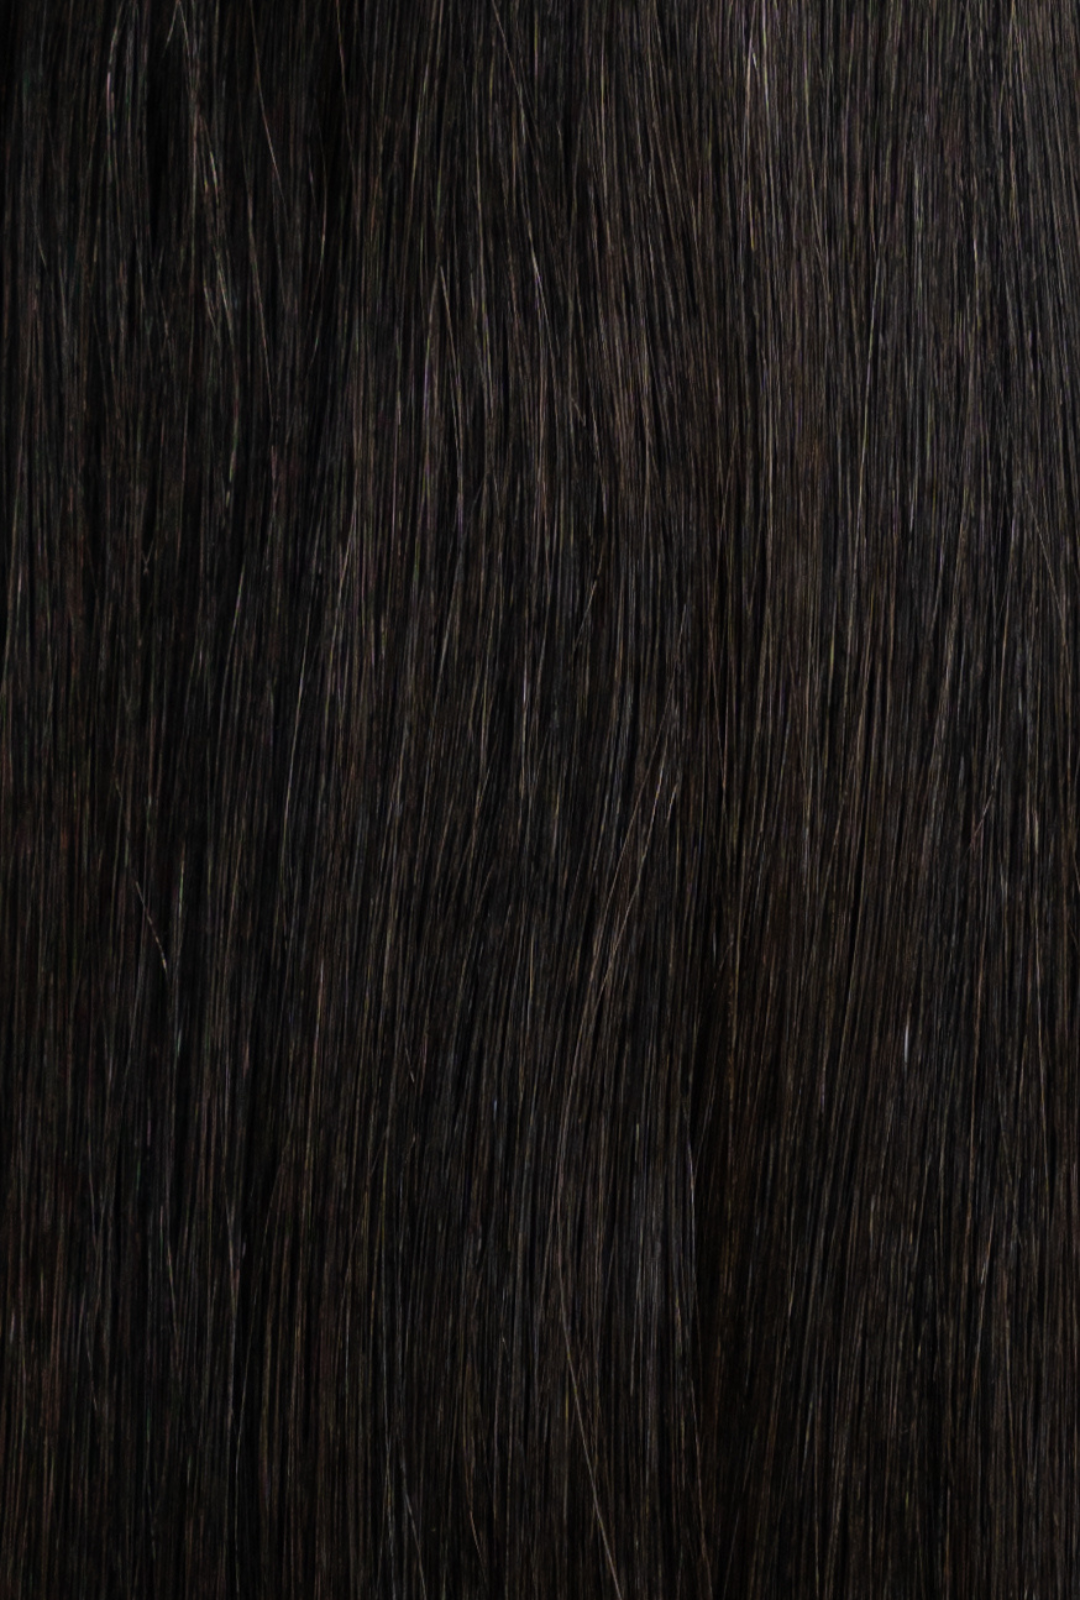 Laced Hair Machine Sewn Weft Extensions #1B (Dark Roast)